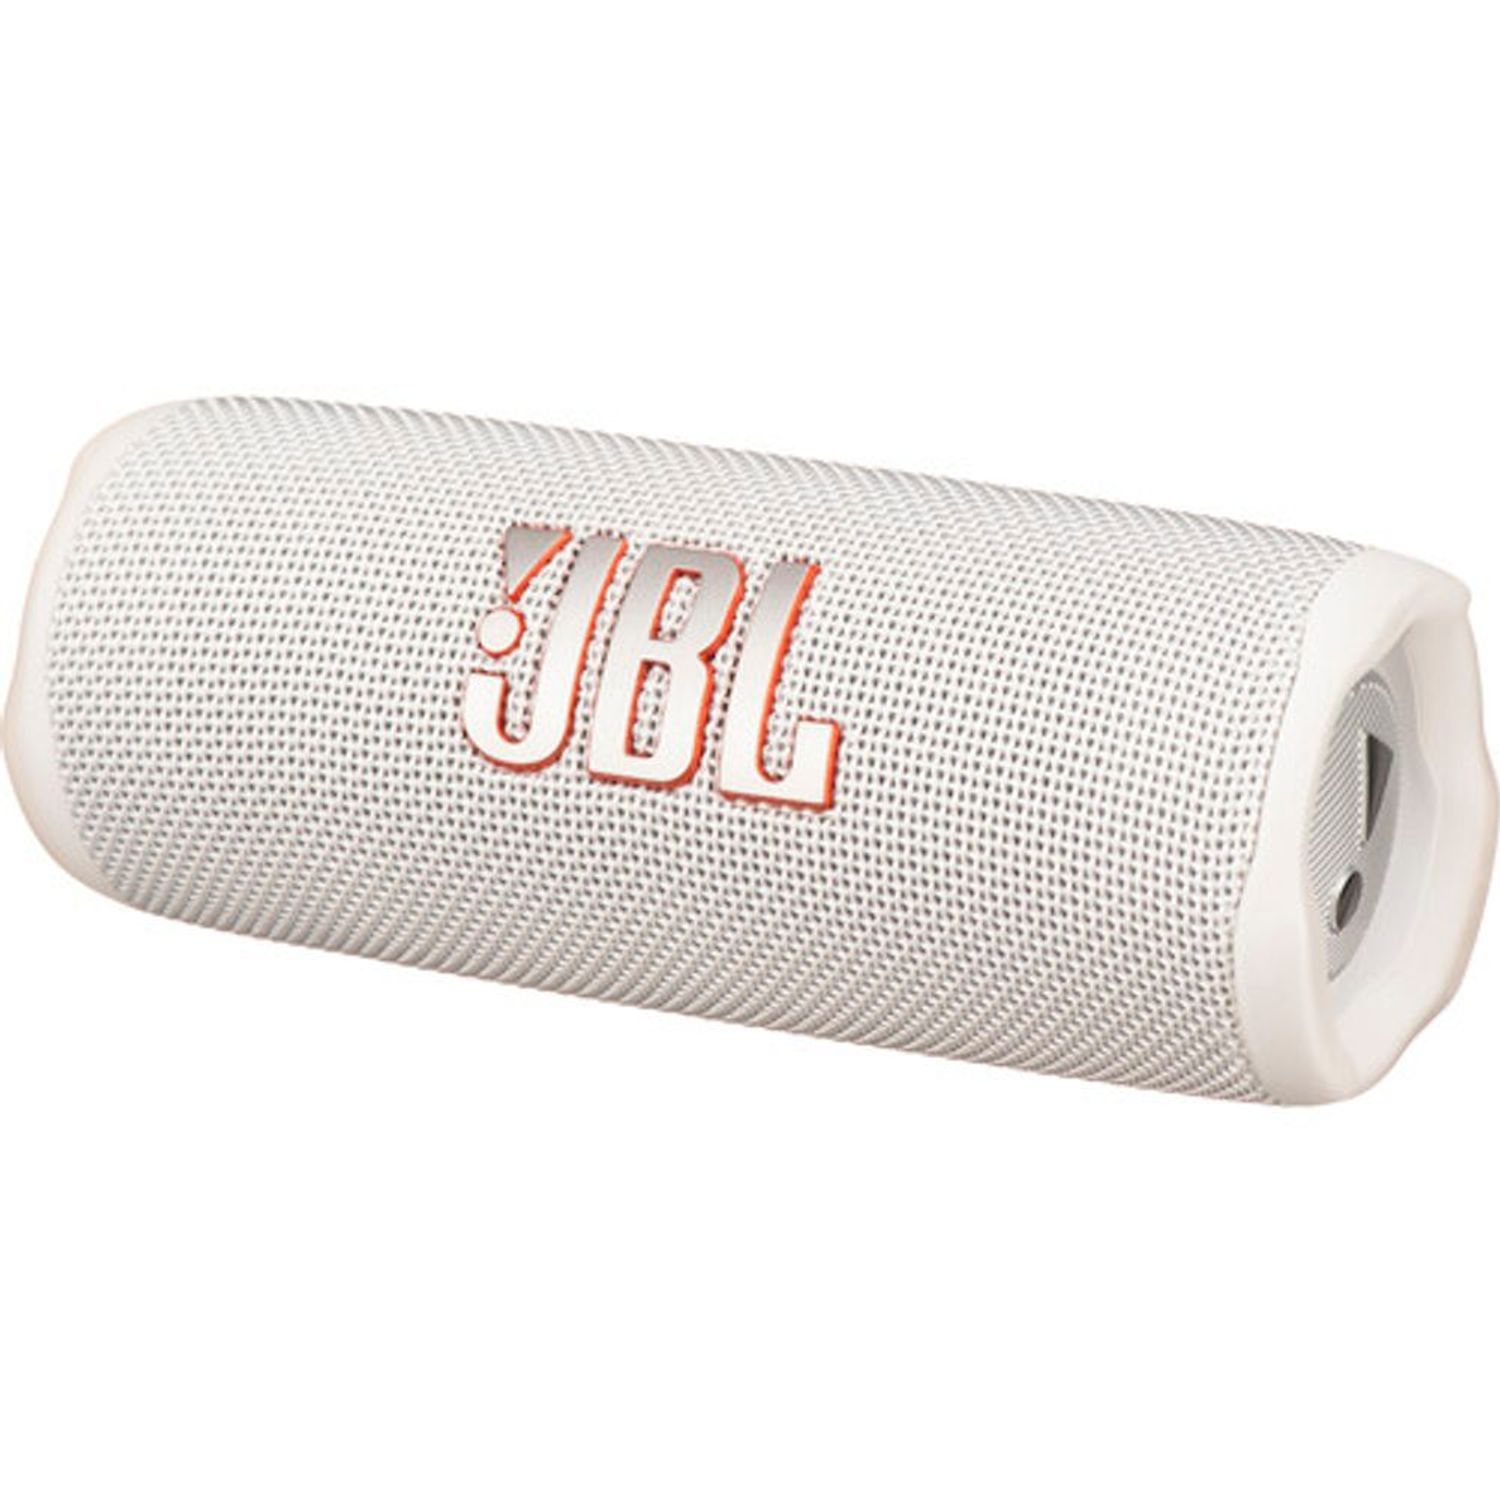 JBL Flip 6, parlante portátil a prueba de agua.